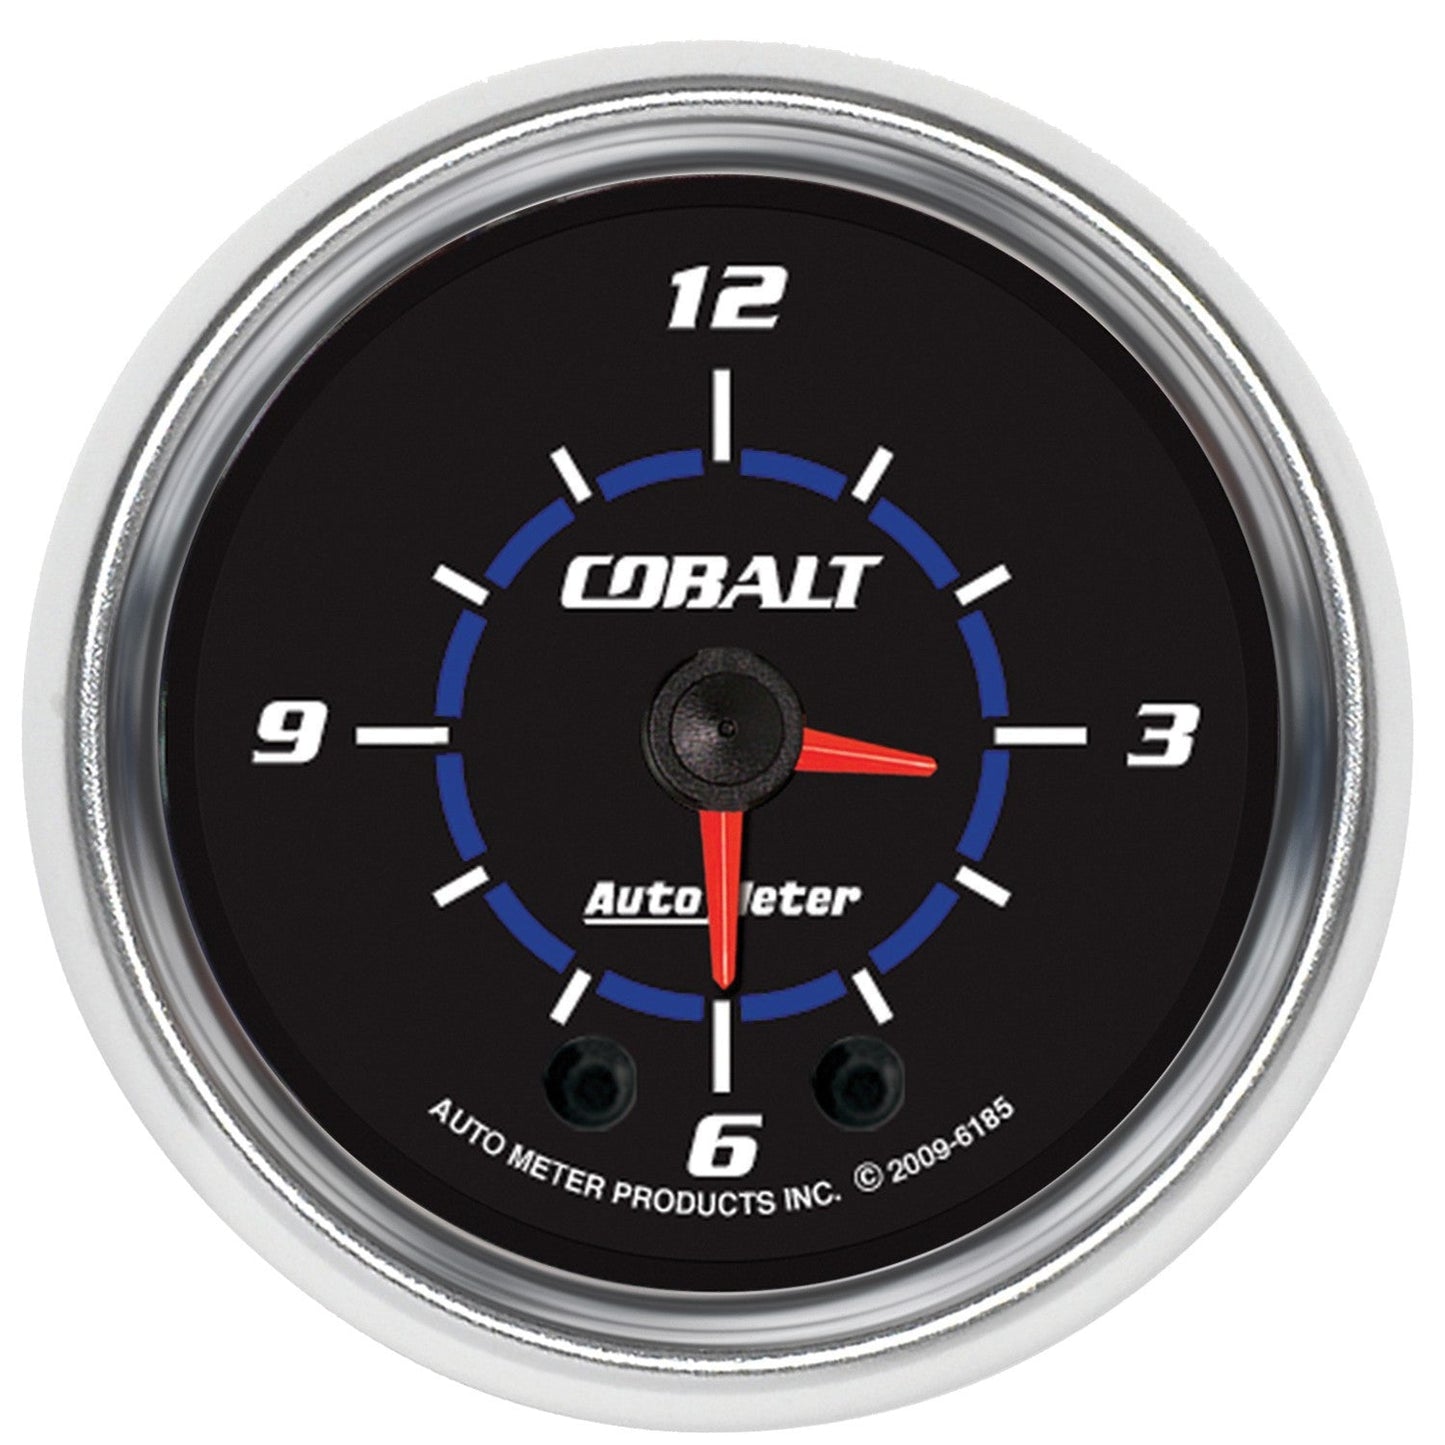 AutoMeter - 2-1/16" CLOCK, 12 HOUR, COBALT (6185)